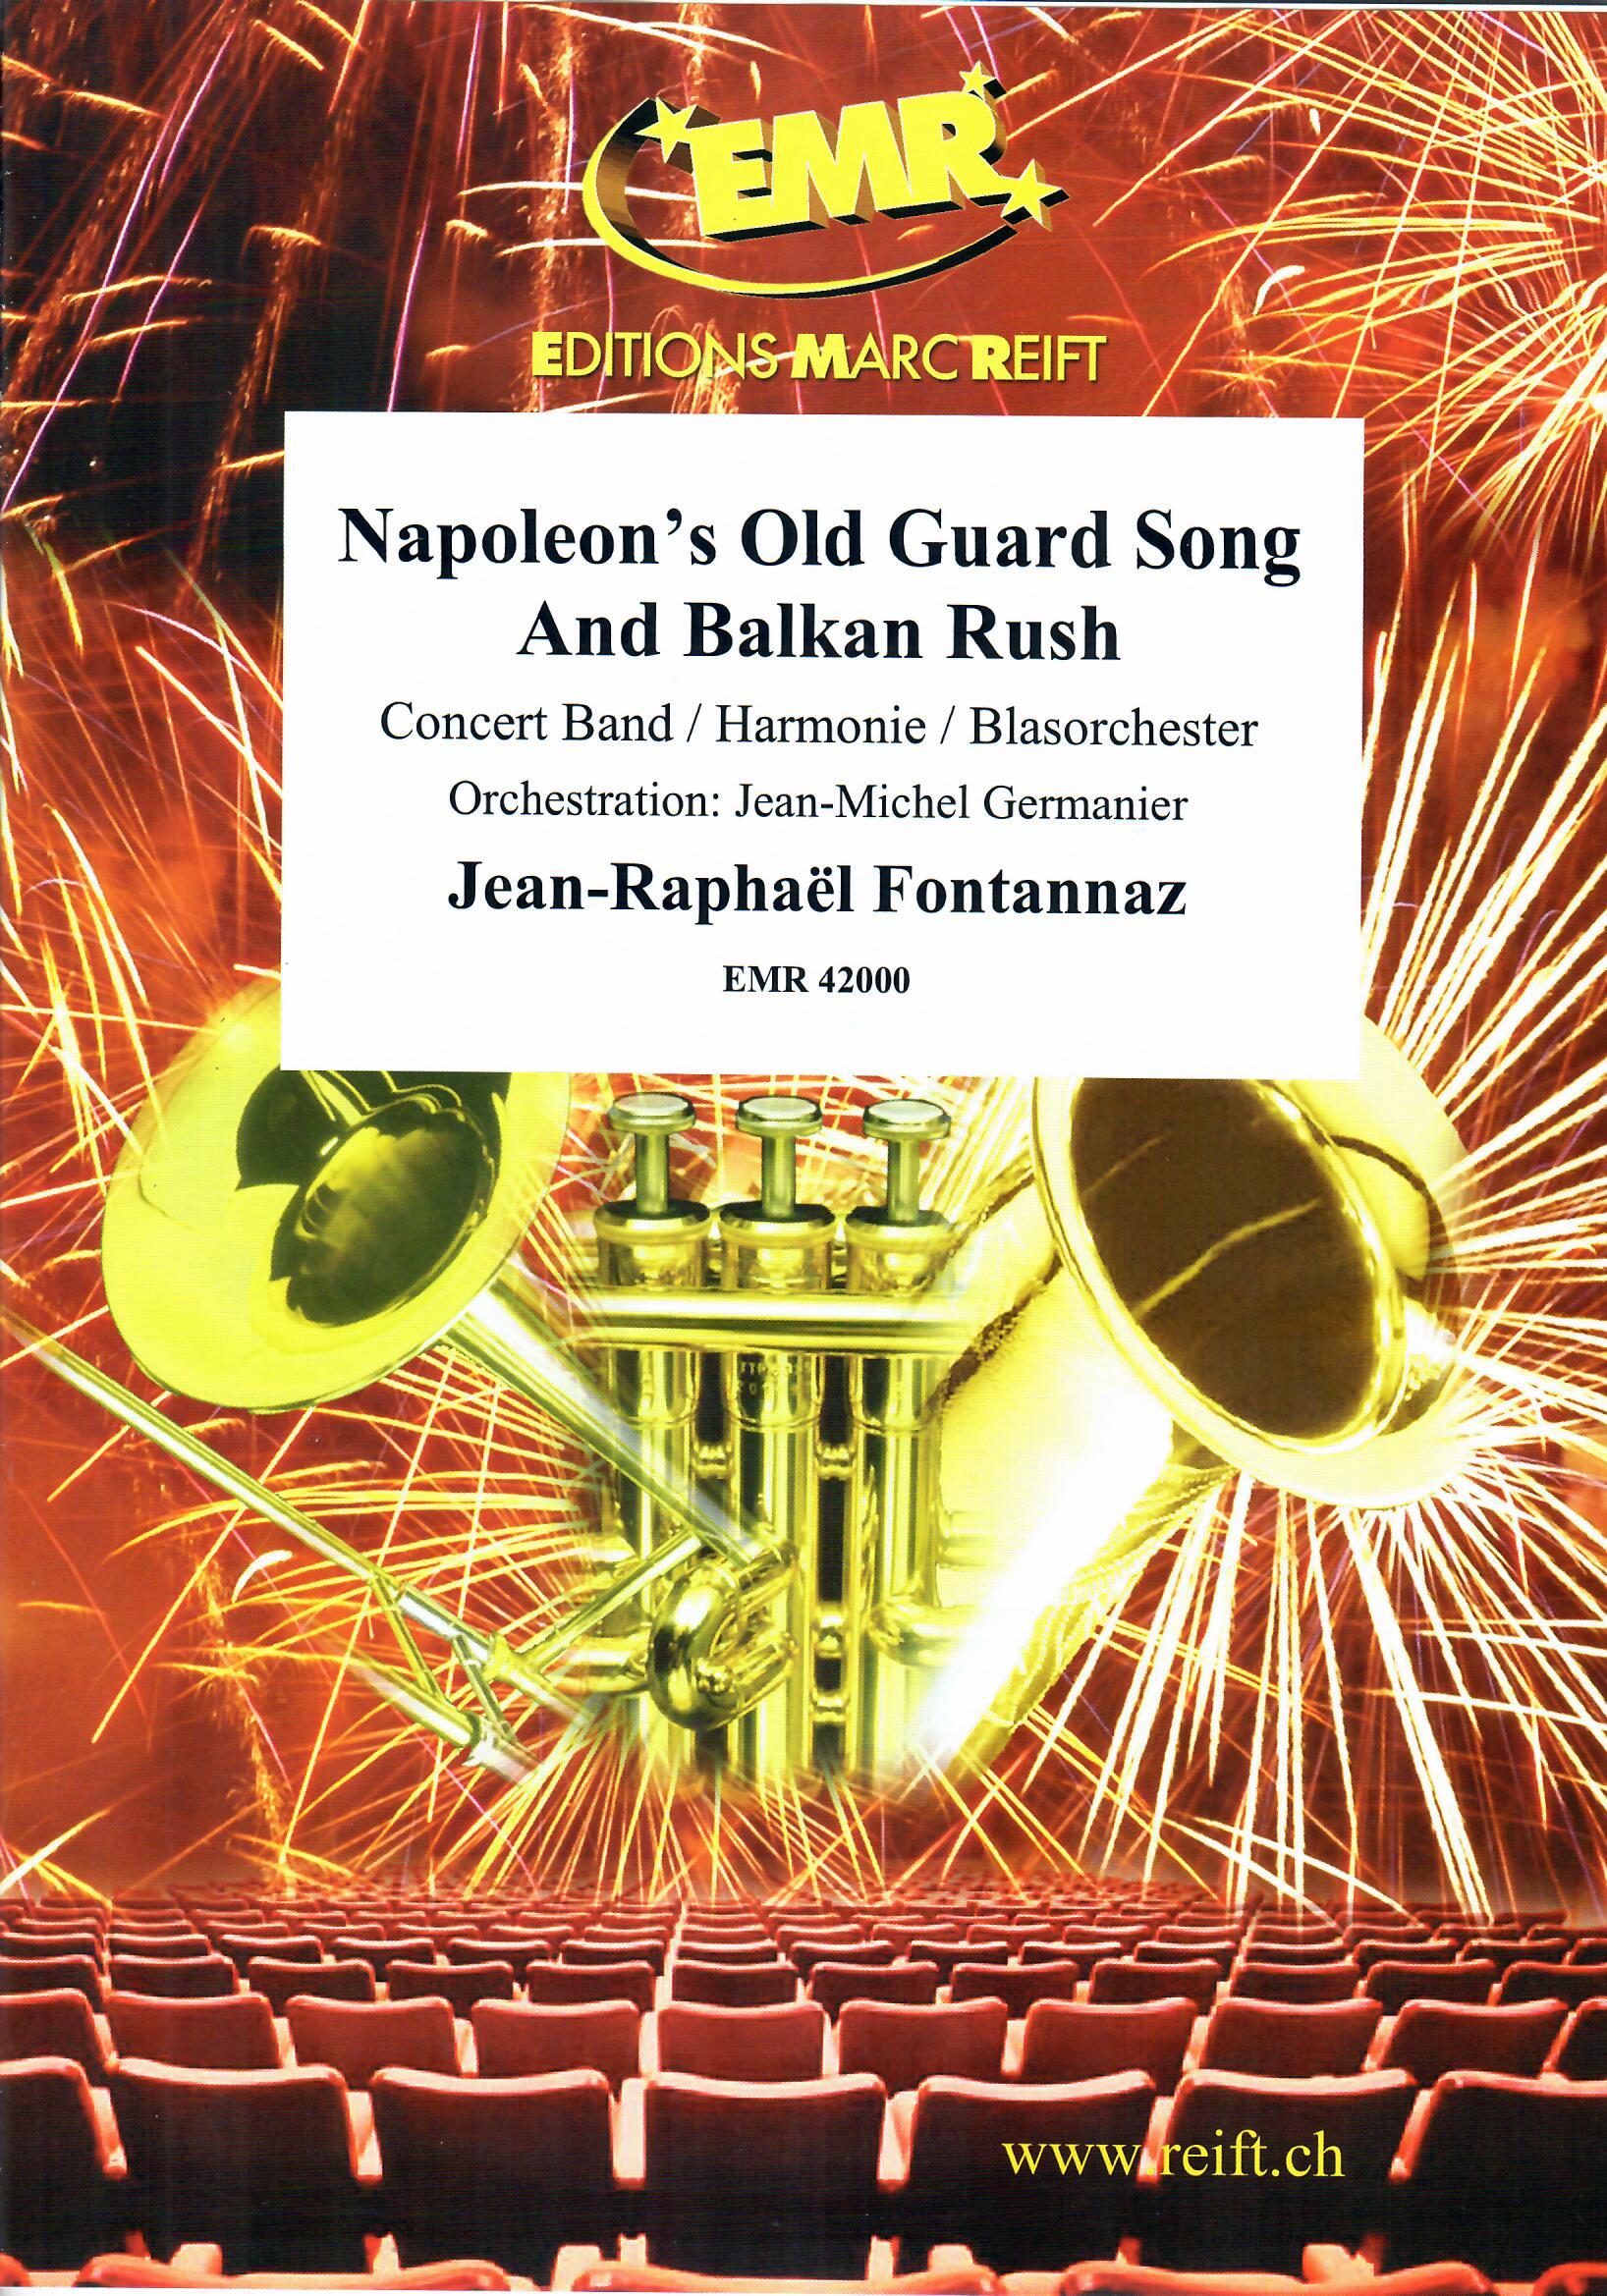 Napoleon's Old Guard Song And Balkan Rush